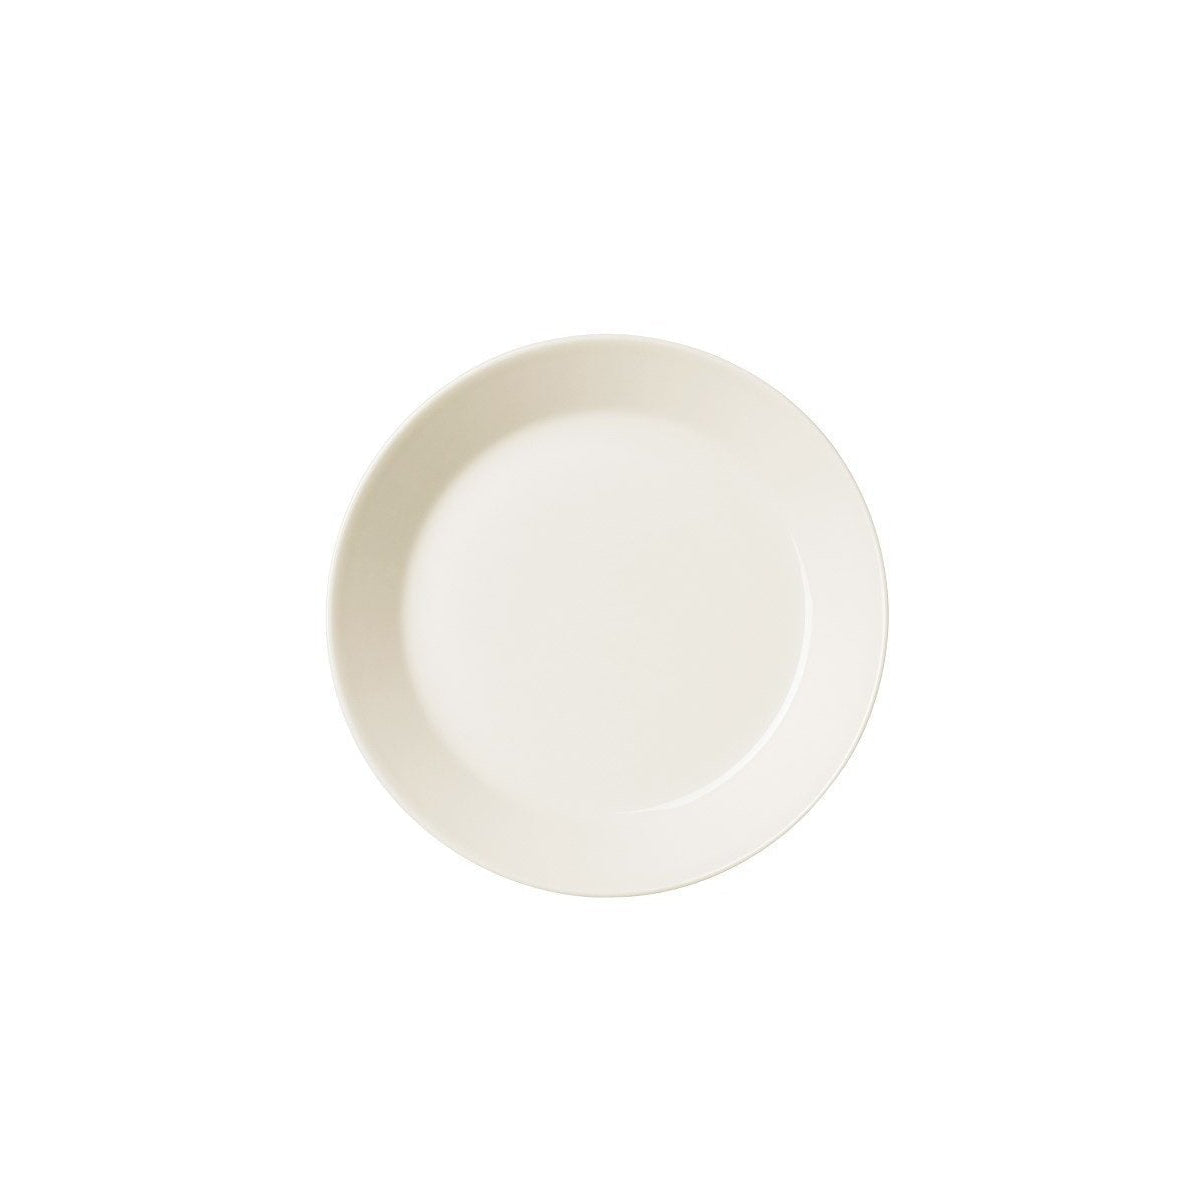 Iittala Teema Plate Flat White, 17cm